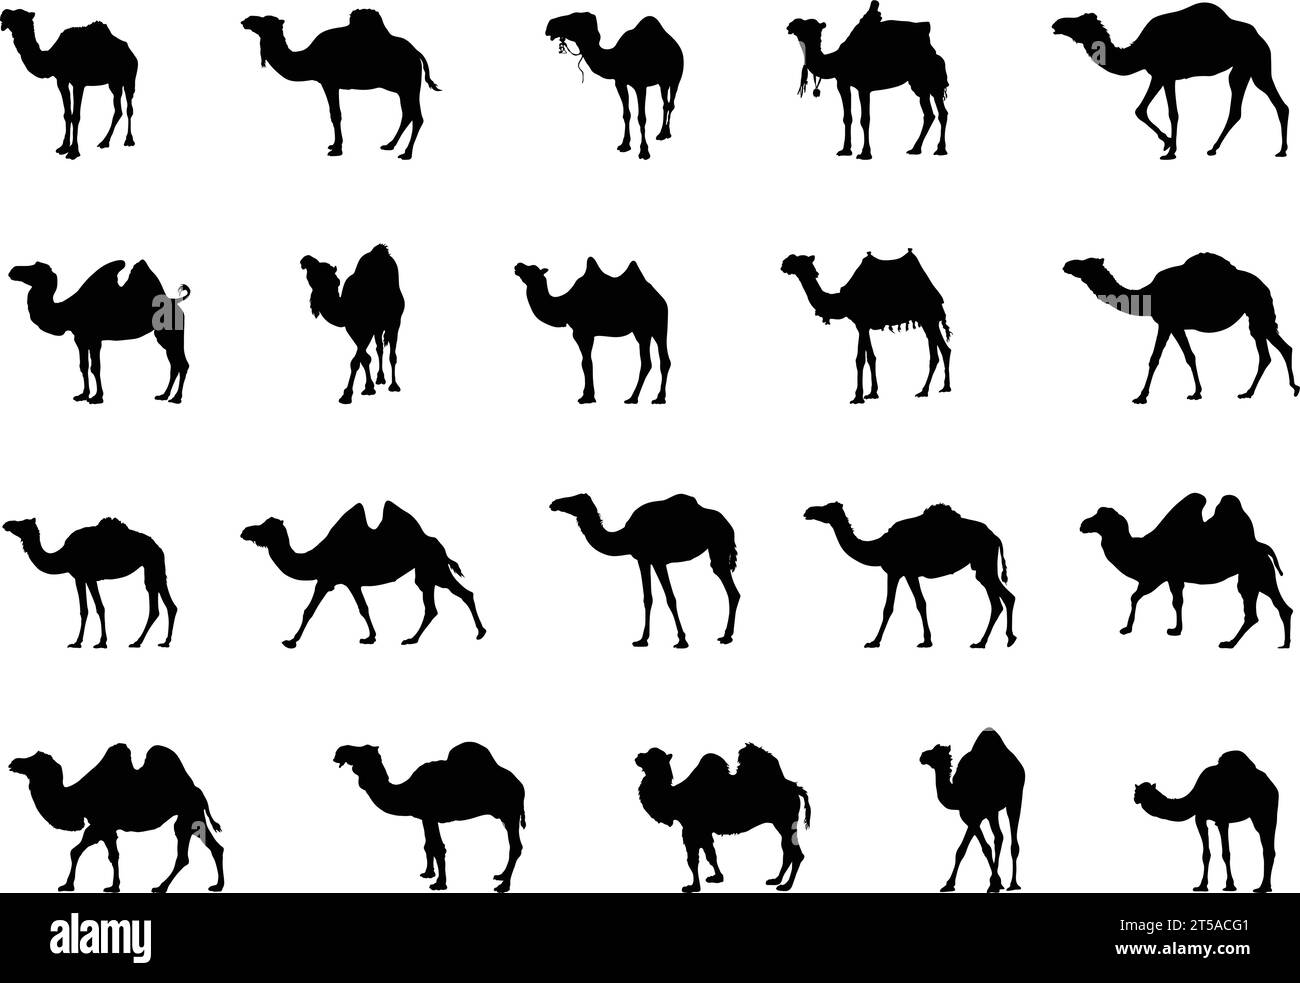 Camel silhouettes, Camel silhouette set, Camel vector illustration, Camel Svg, Camel clipart Stock Vector